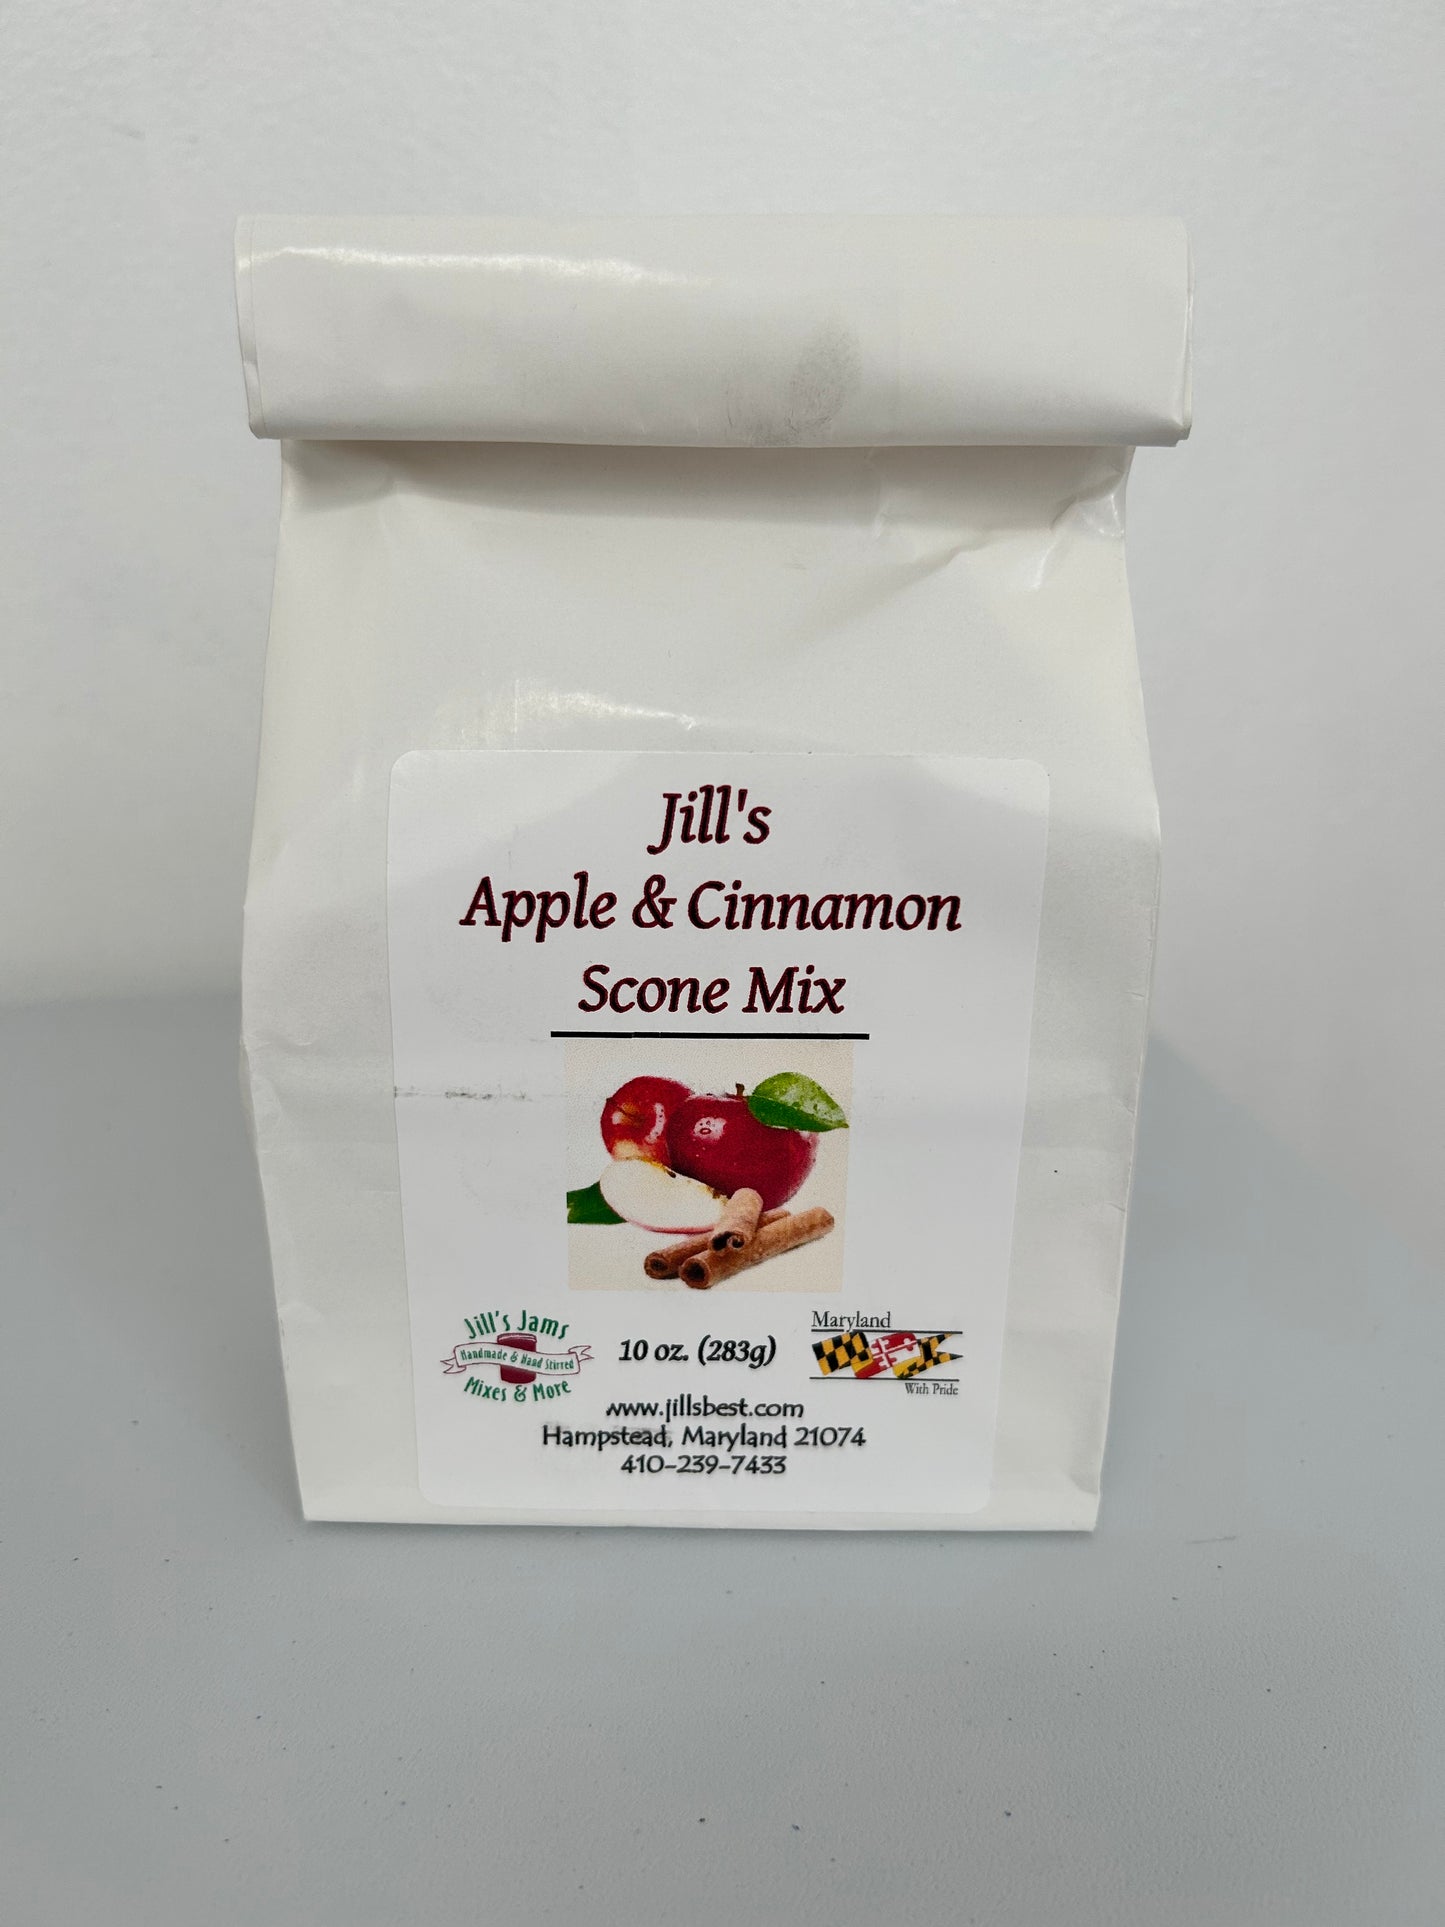 Jill's Apple & Cinnamon Scone Mix